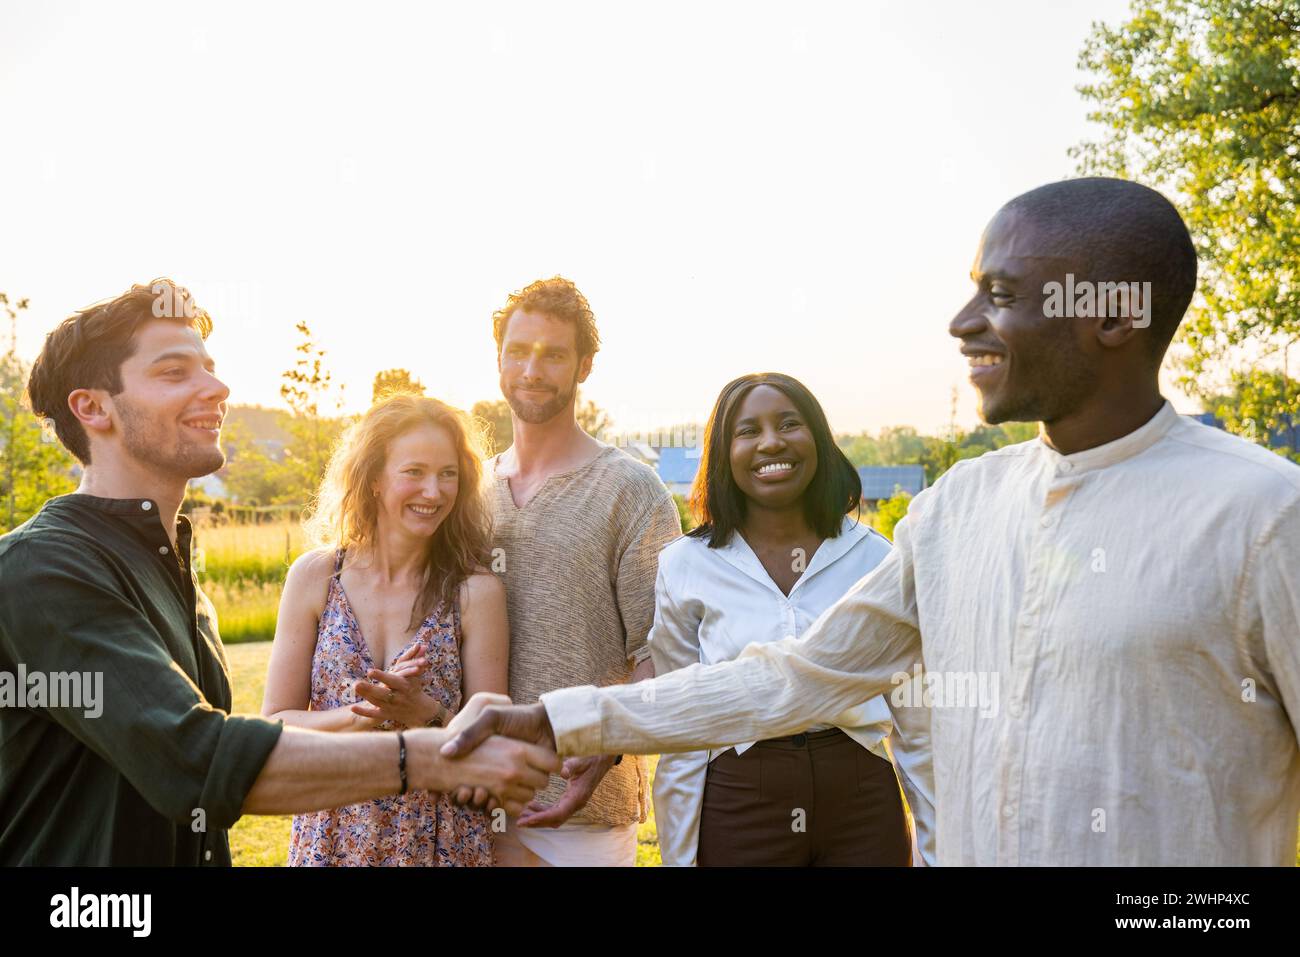 Virtual Victory Handshake: Multi-Ethnic Fun at Garden Party Stock Photo